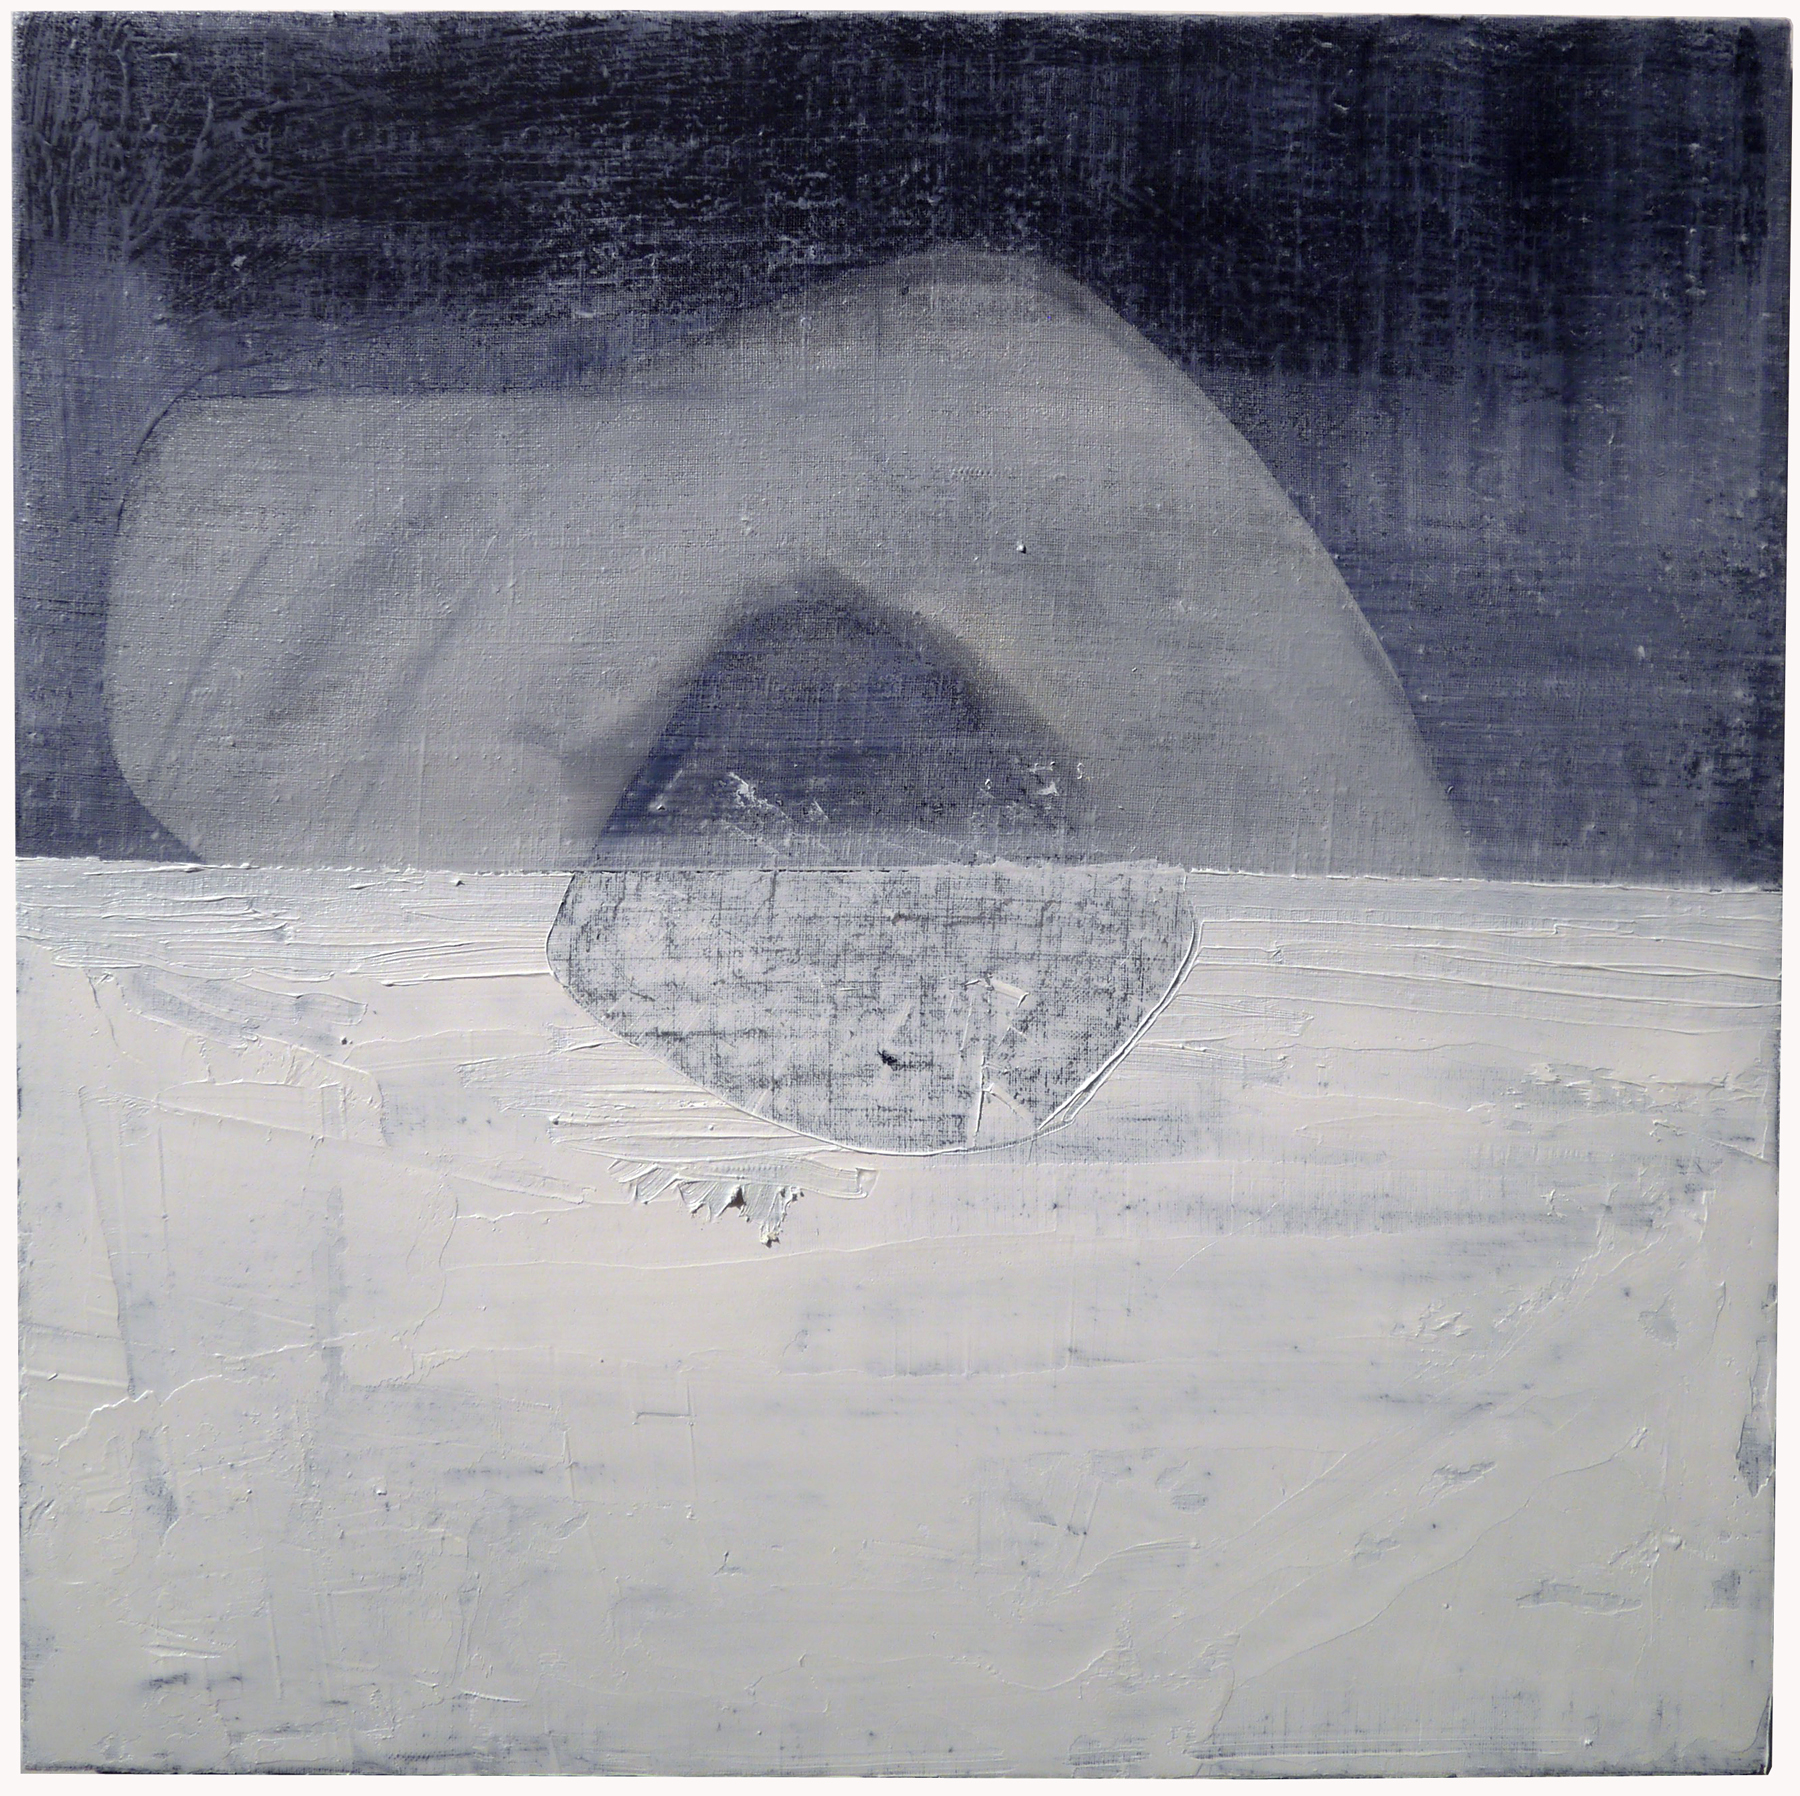  Kathline Carr,  Embedded in Ice,&nbsp; &nbsp;Oil and graphite on linen, 19x19 